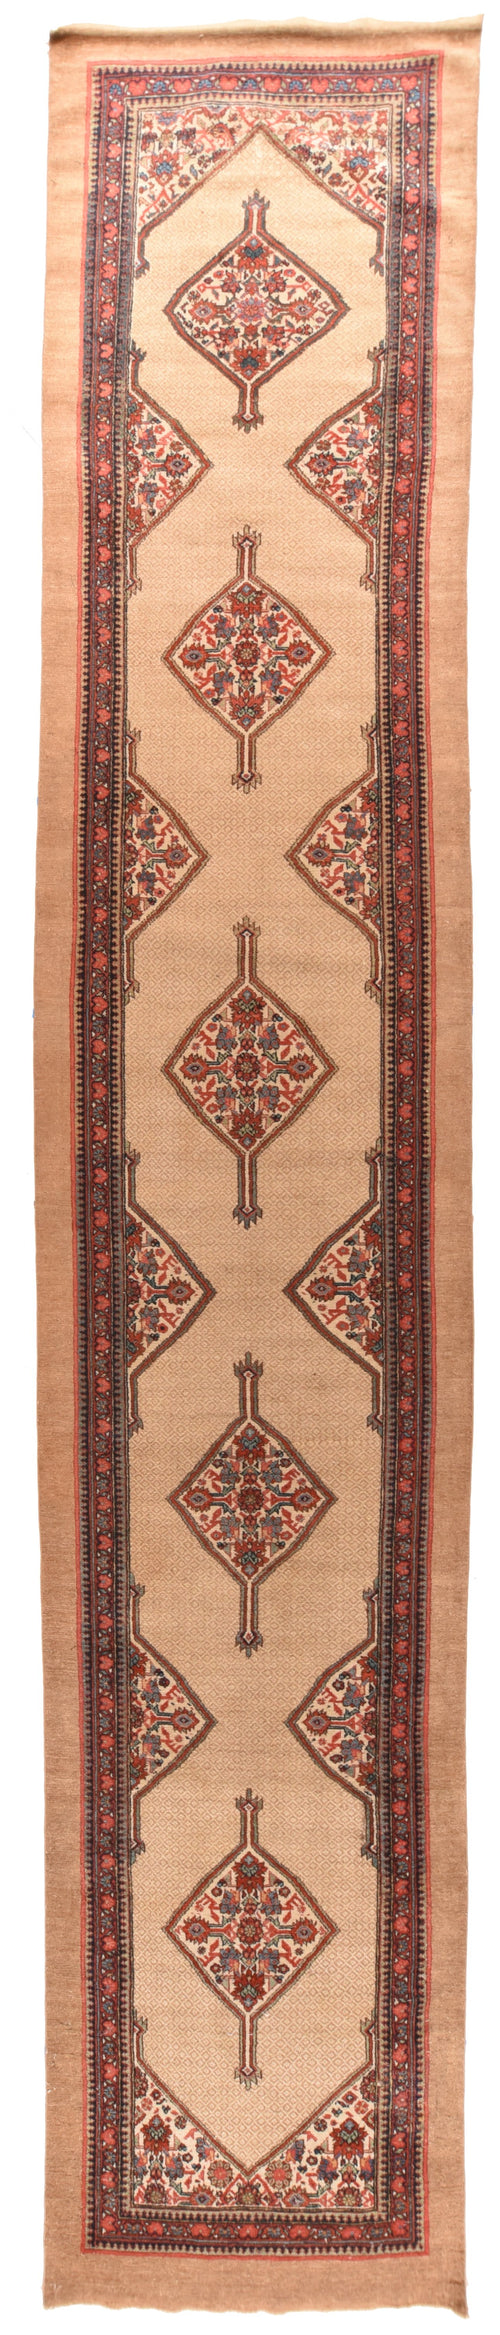 Antique Red Persian Sarab Area Rug